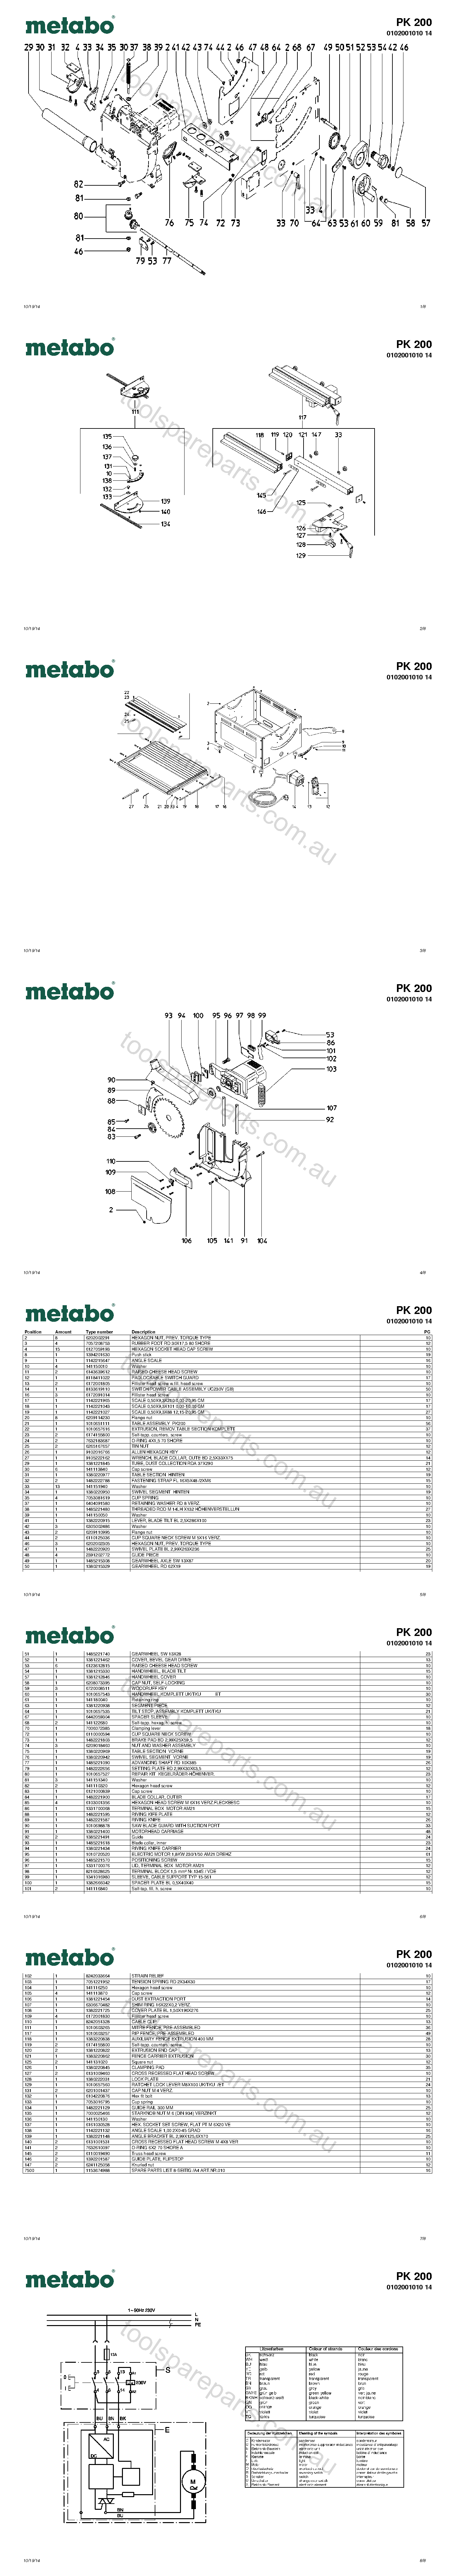 Metabo PK 200 0102001010 14  Diagram 1